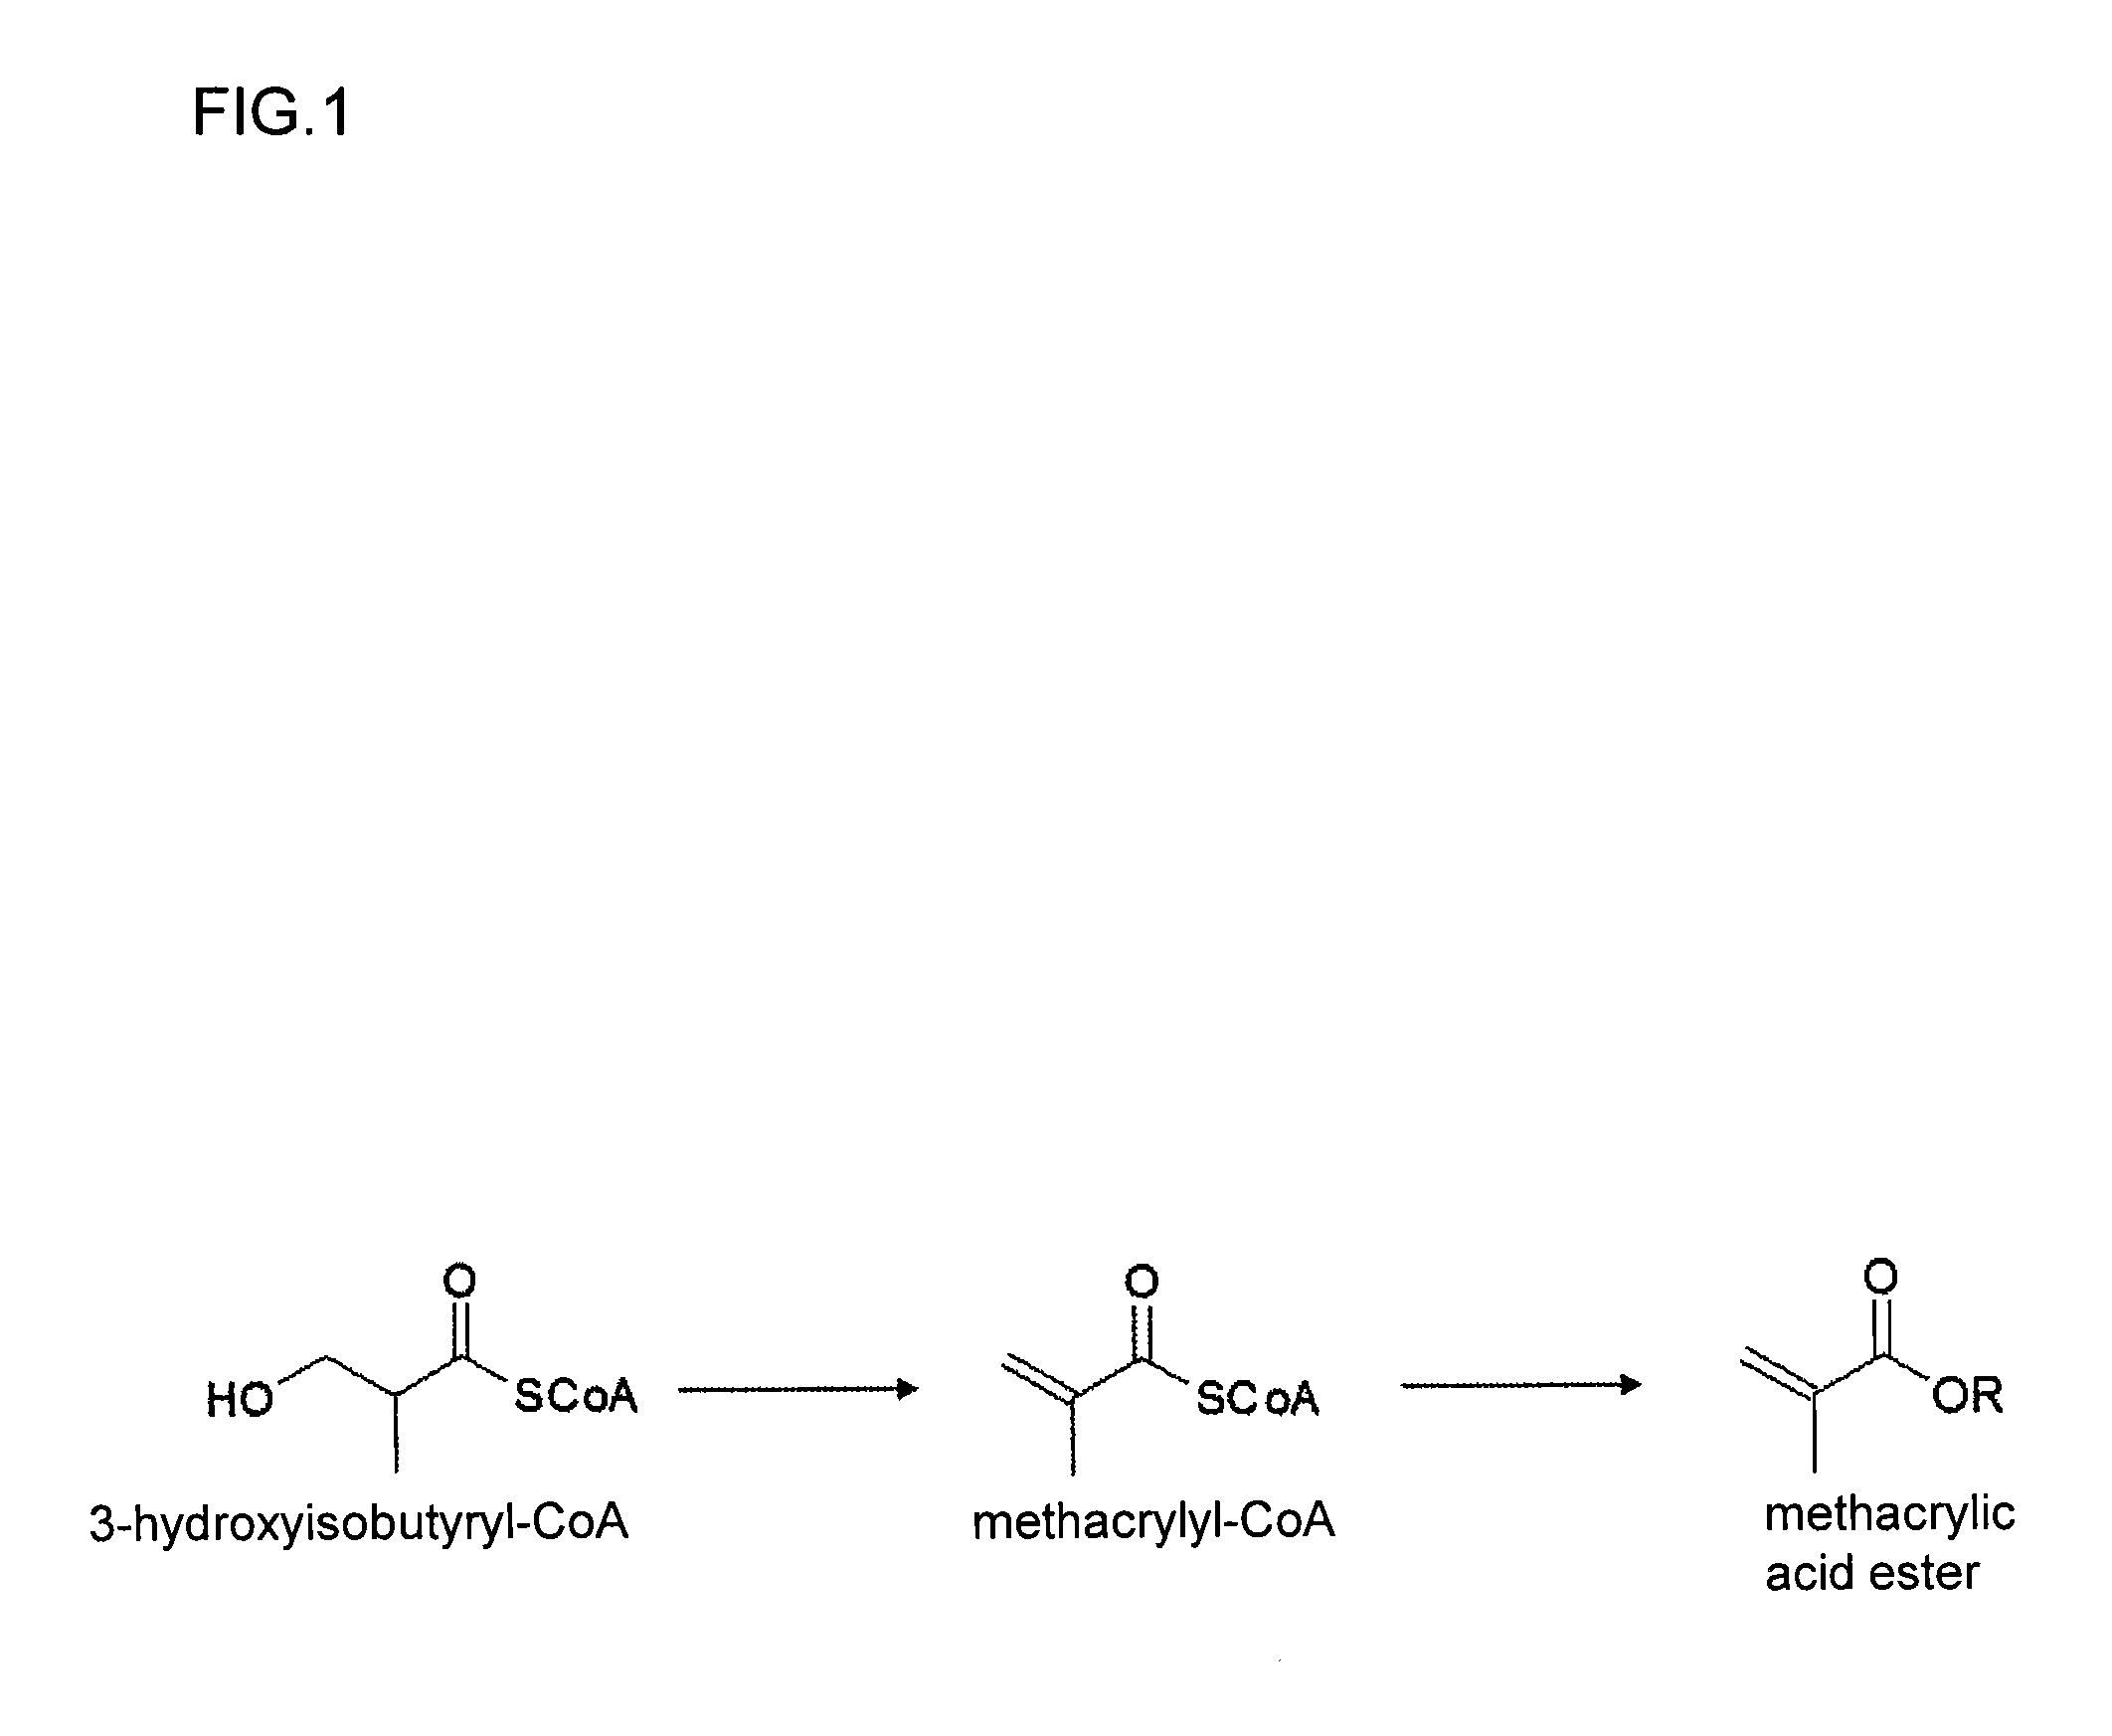 Method for producing methacrylic acid ester